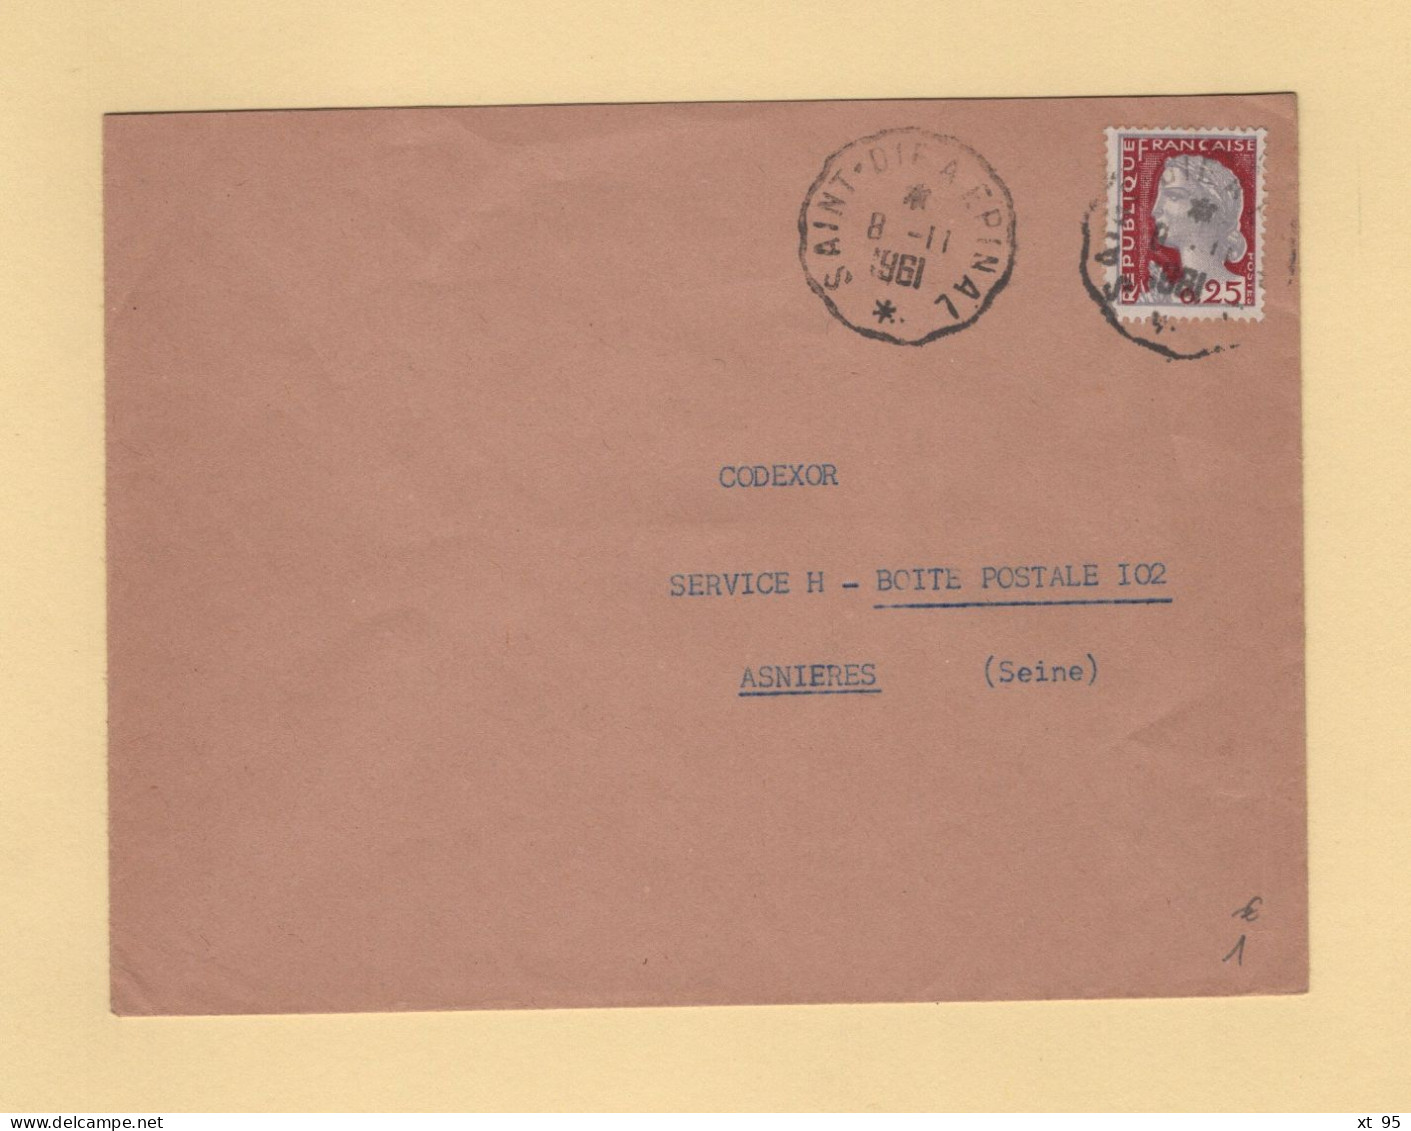 Convoyeur St Die A Epinal - 1961 - Railway Post